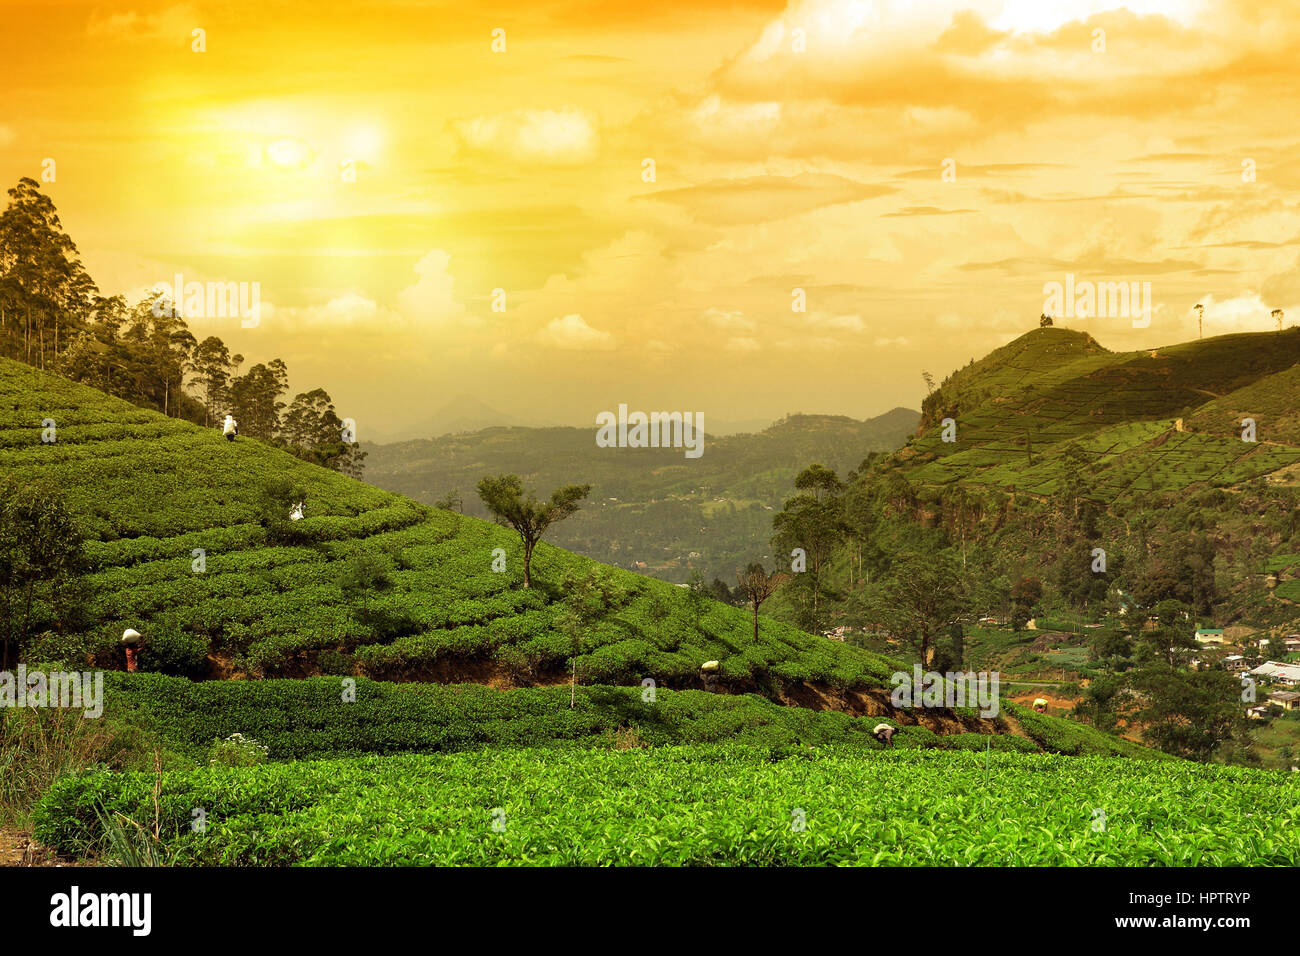 tea plantation landscape sunset Stock Photo